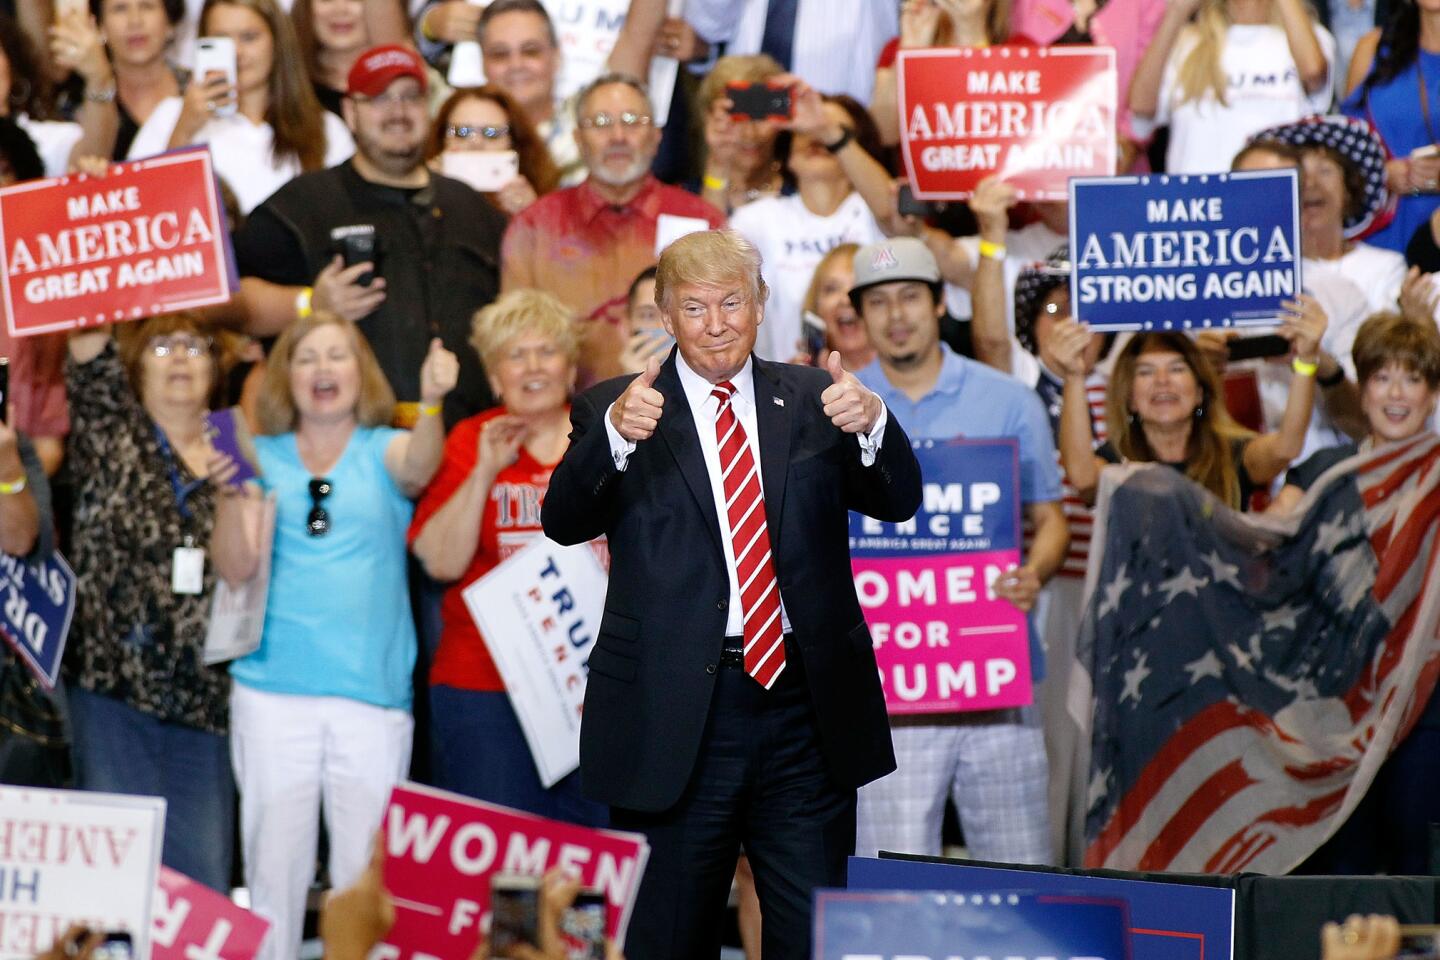 President Trump rally in Phoenix